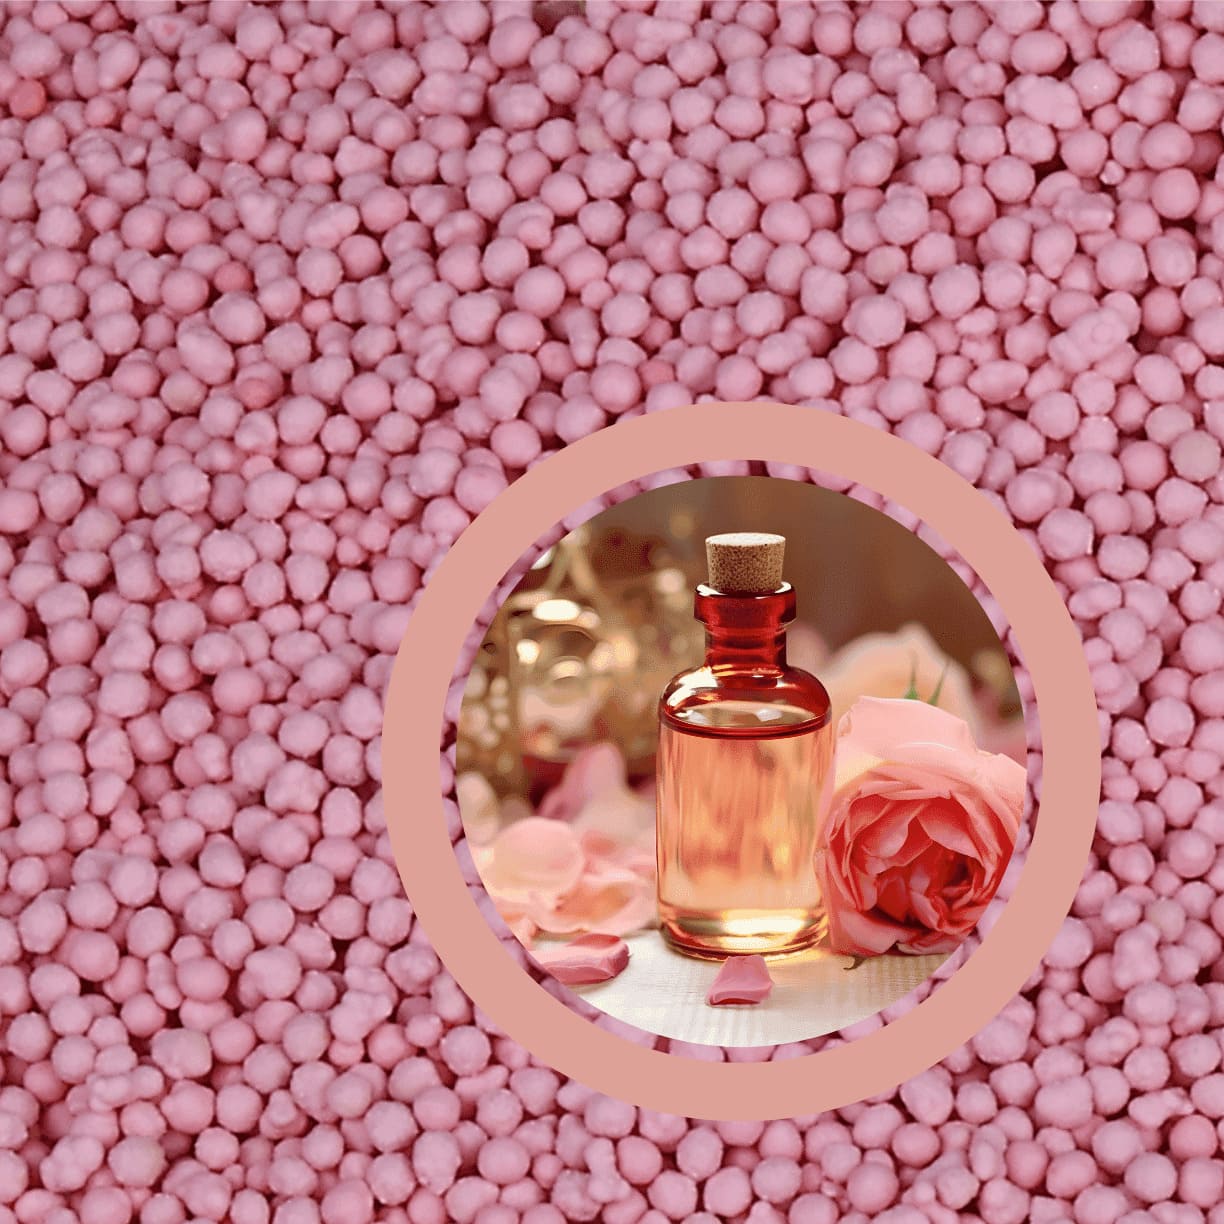 Encapsulated-Rose-Fragrance-Beads